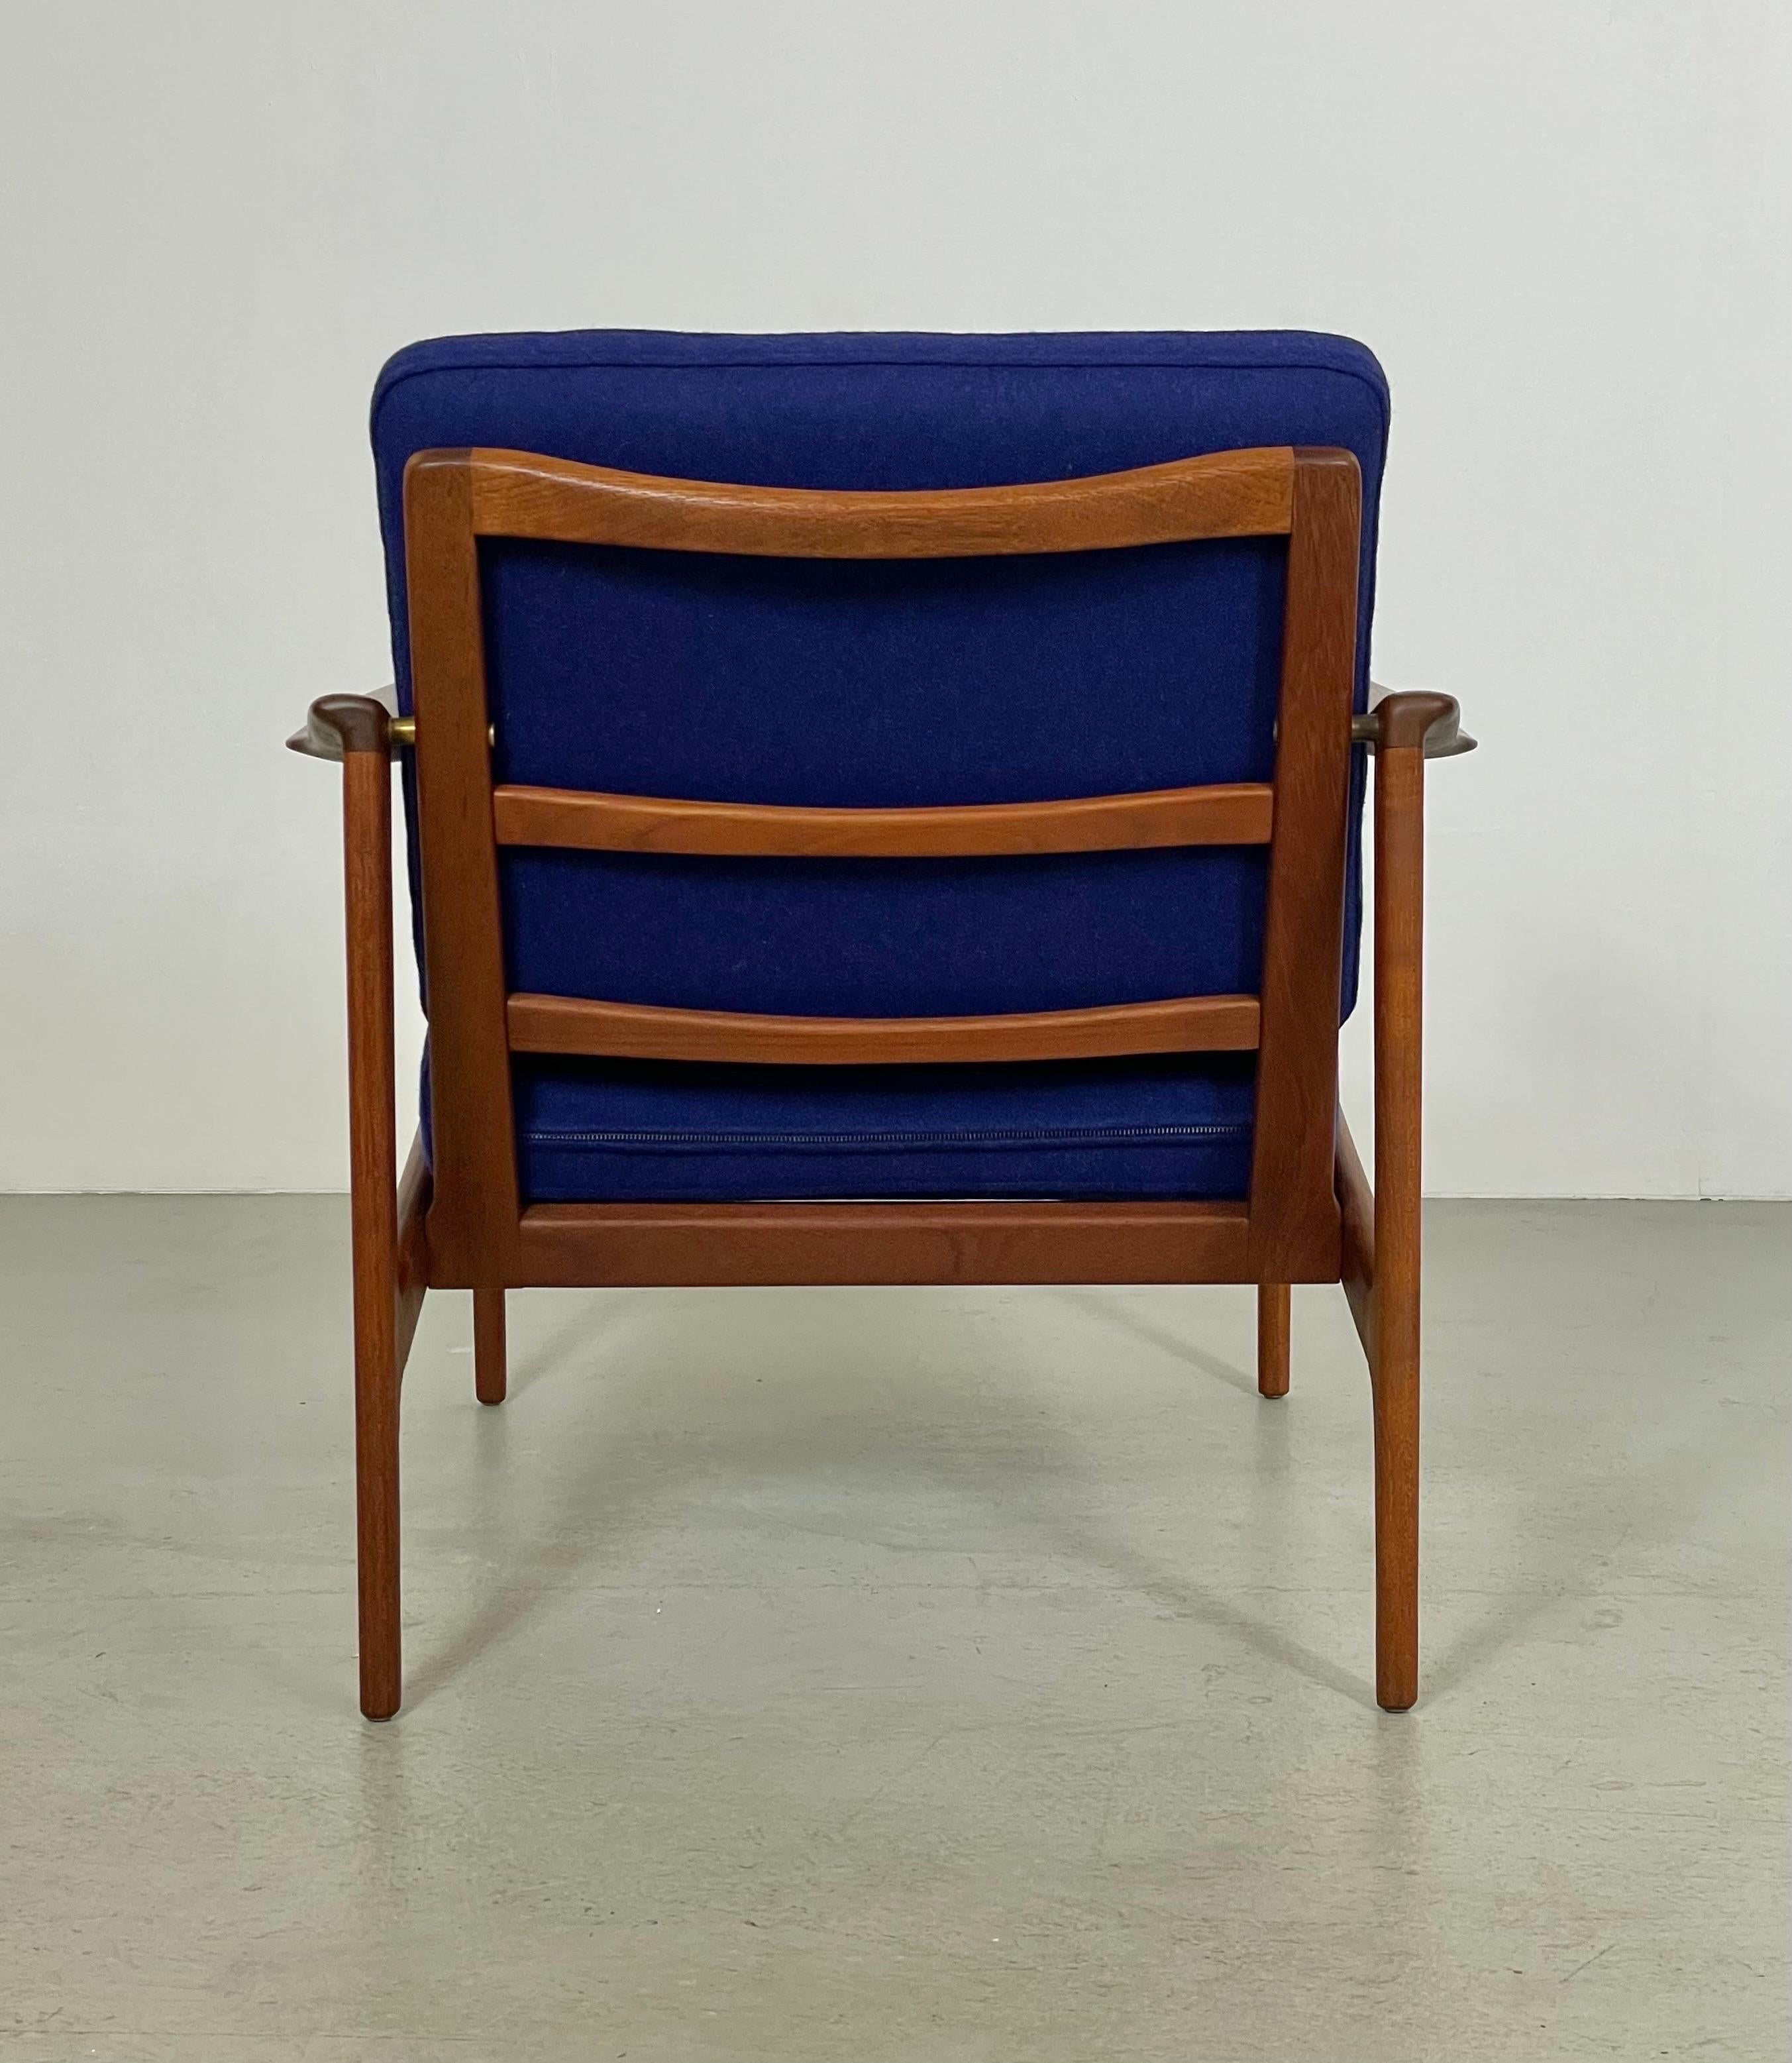 2x Mid-Century Teak Easy Chair by Ib Kofod-Larsen 1960s Denmark For Sale 10